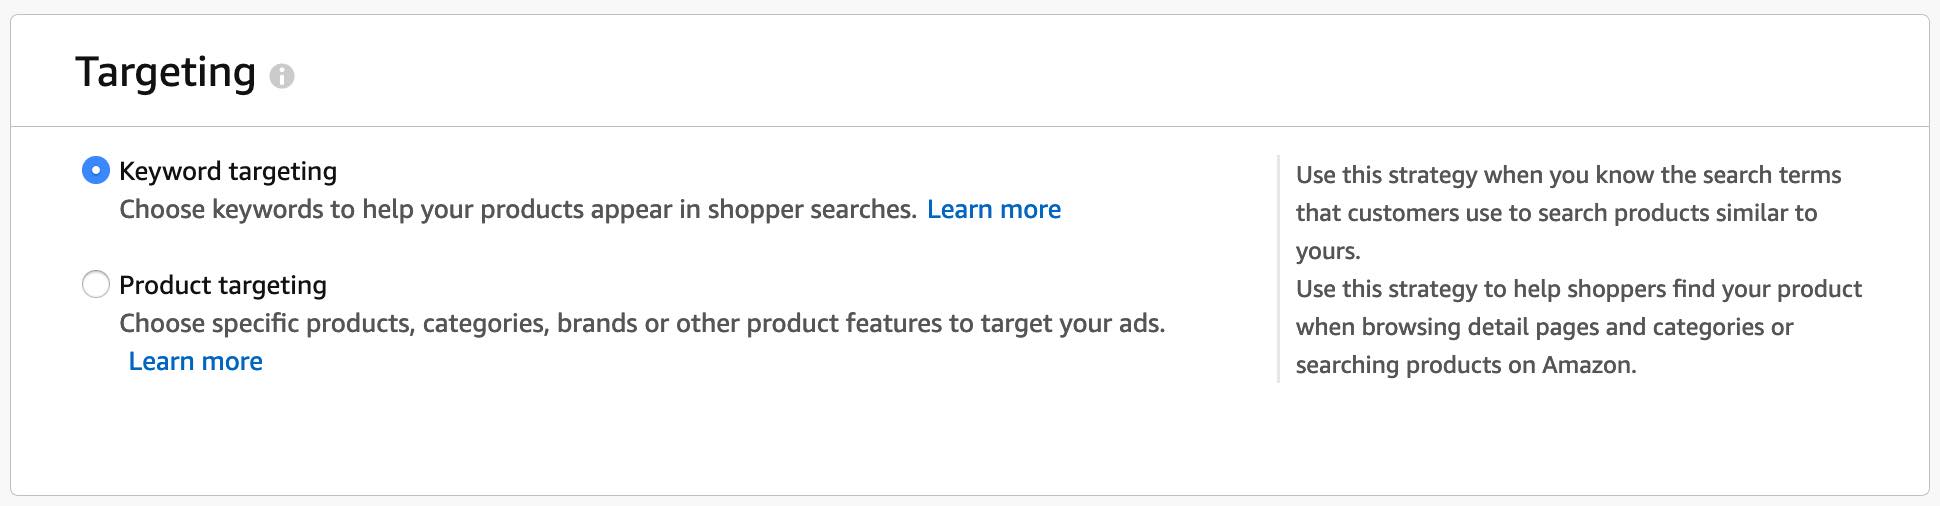 Amazon Ads Keyword Targeting